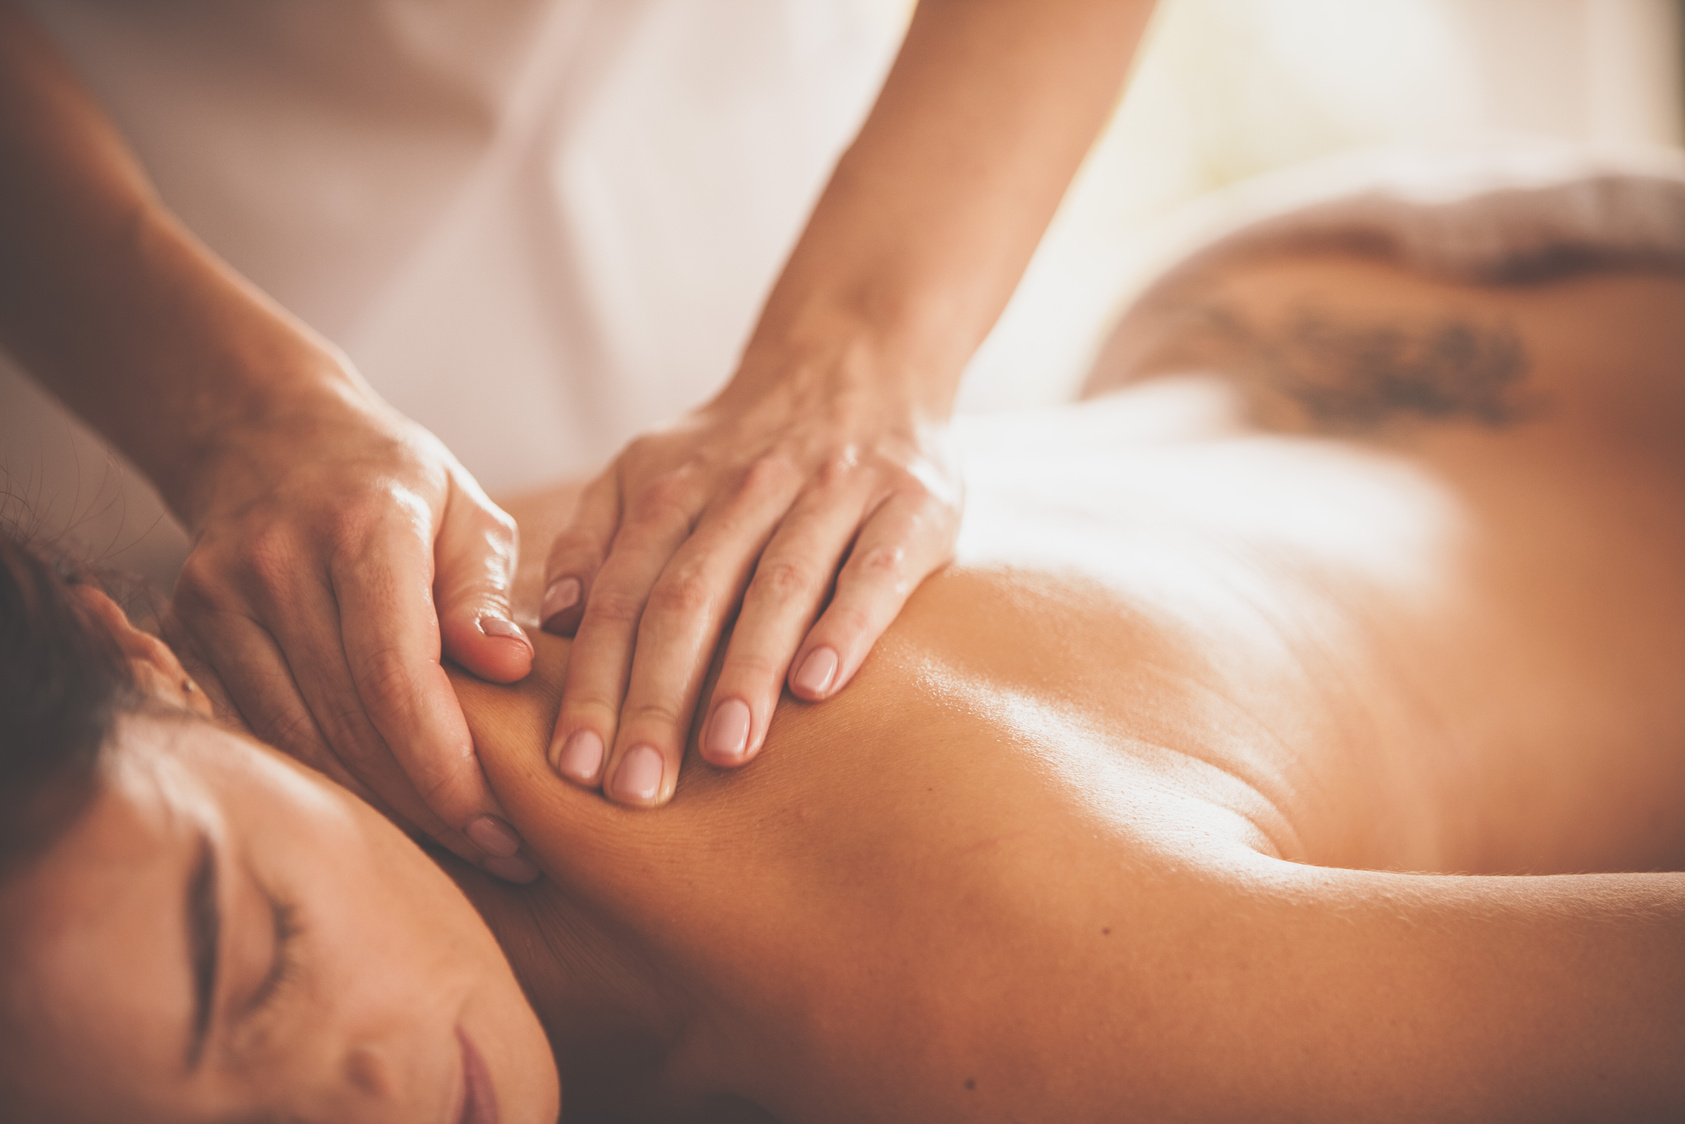 Massage therapist massaging woman's shoulders